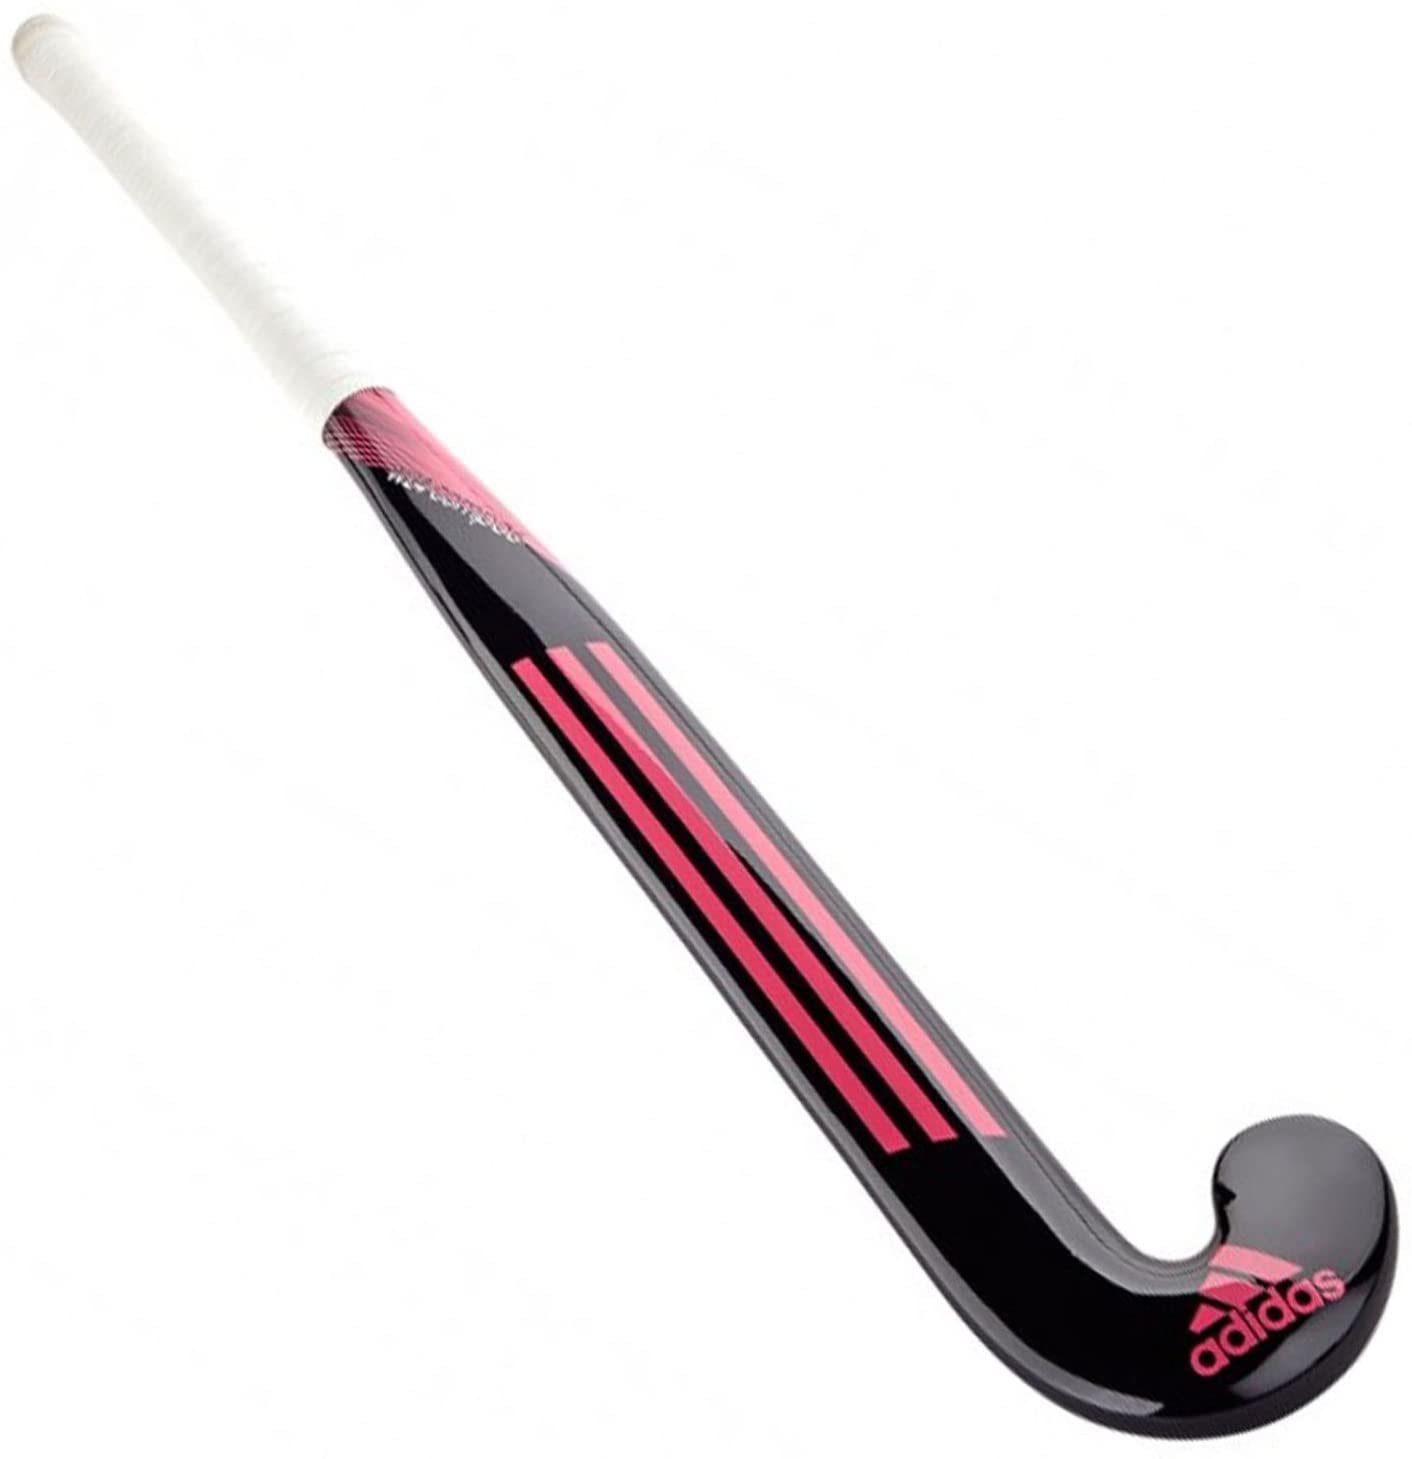 Adidas W24 Compo 6 Junior Composite Hockey Stick (Pink-Night Flash)